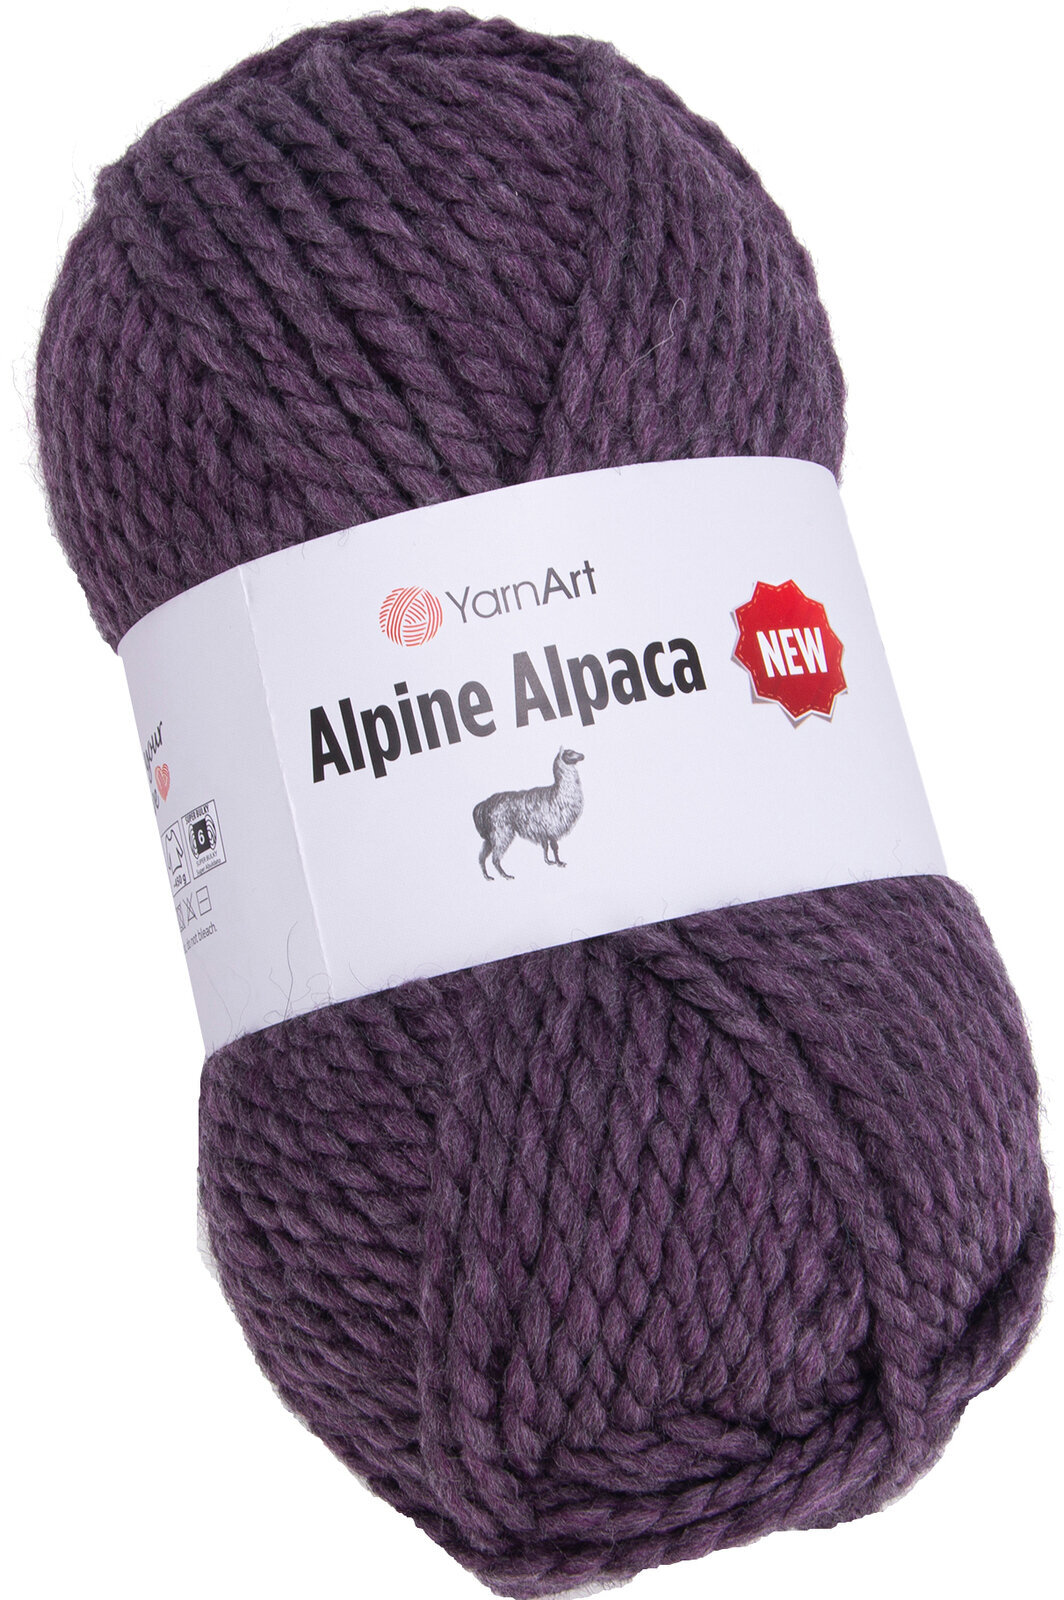 Knitting Yarn Yarn Art Alpine Alpaca New 1451